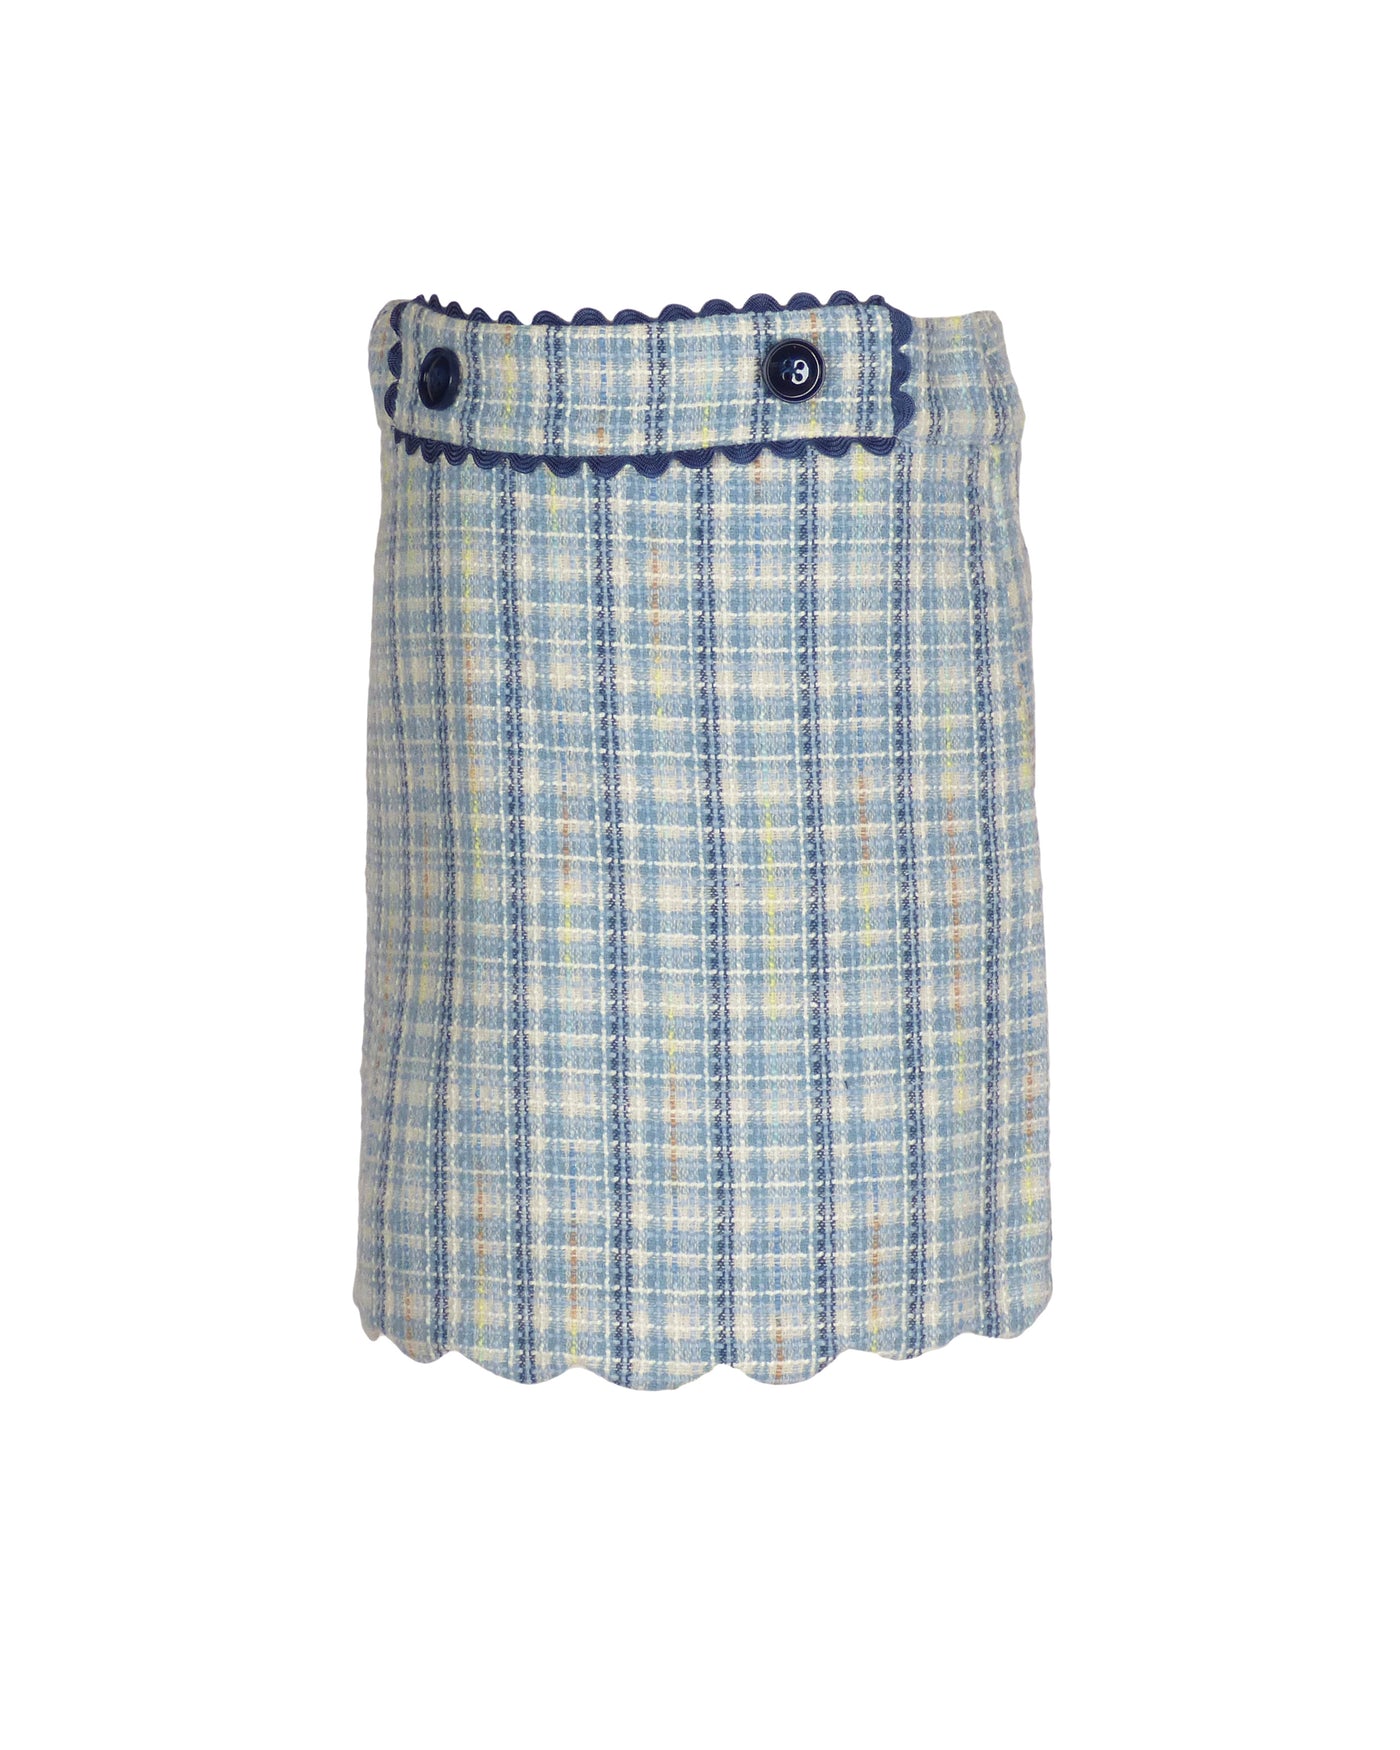 Britton Scalloped Skirt in Blue Jacquard Plaid